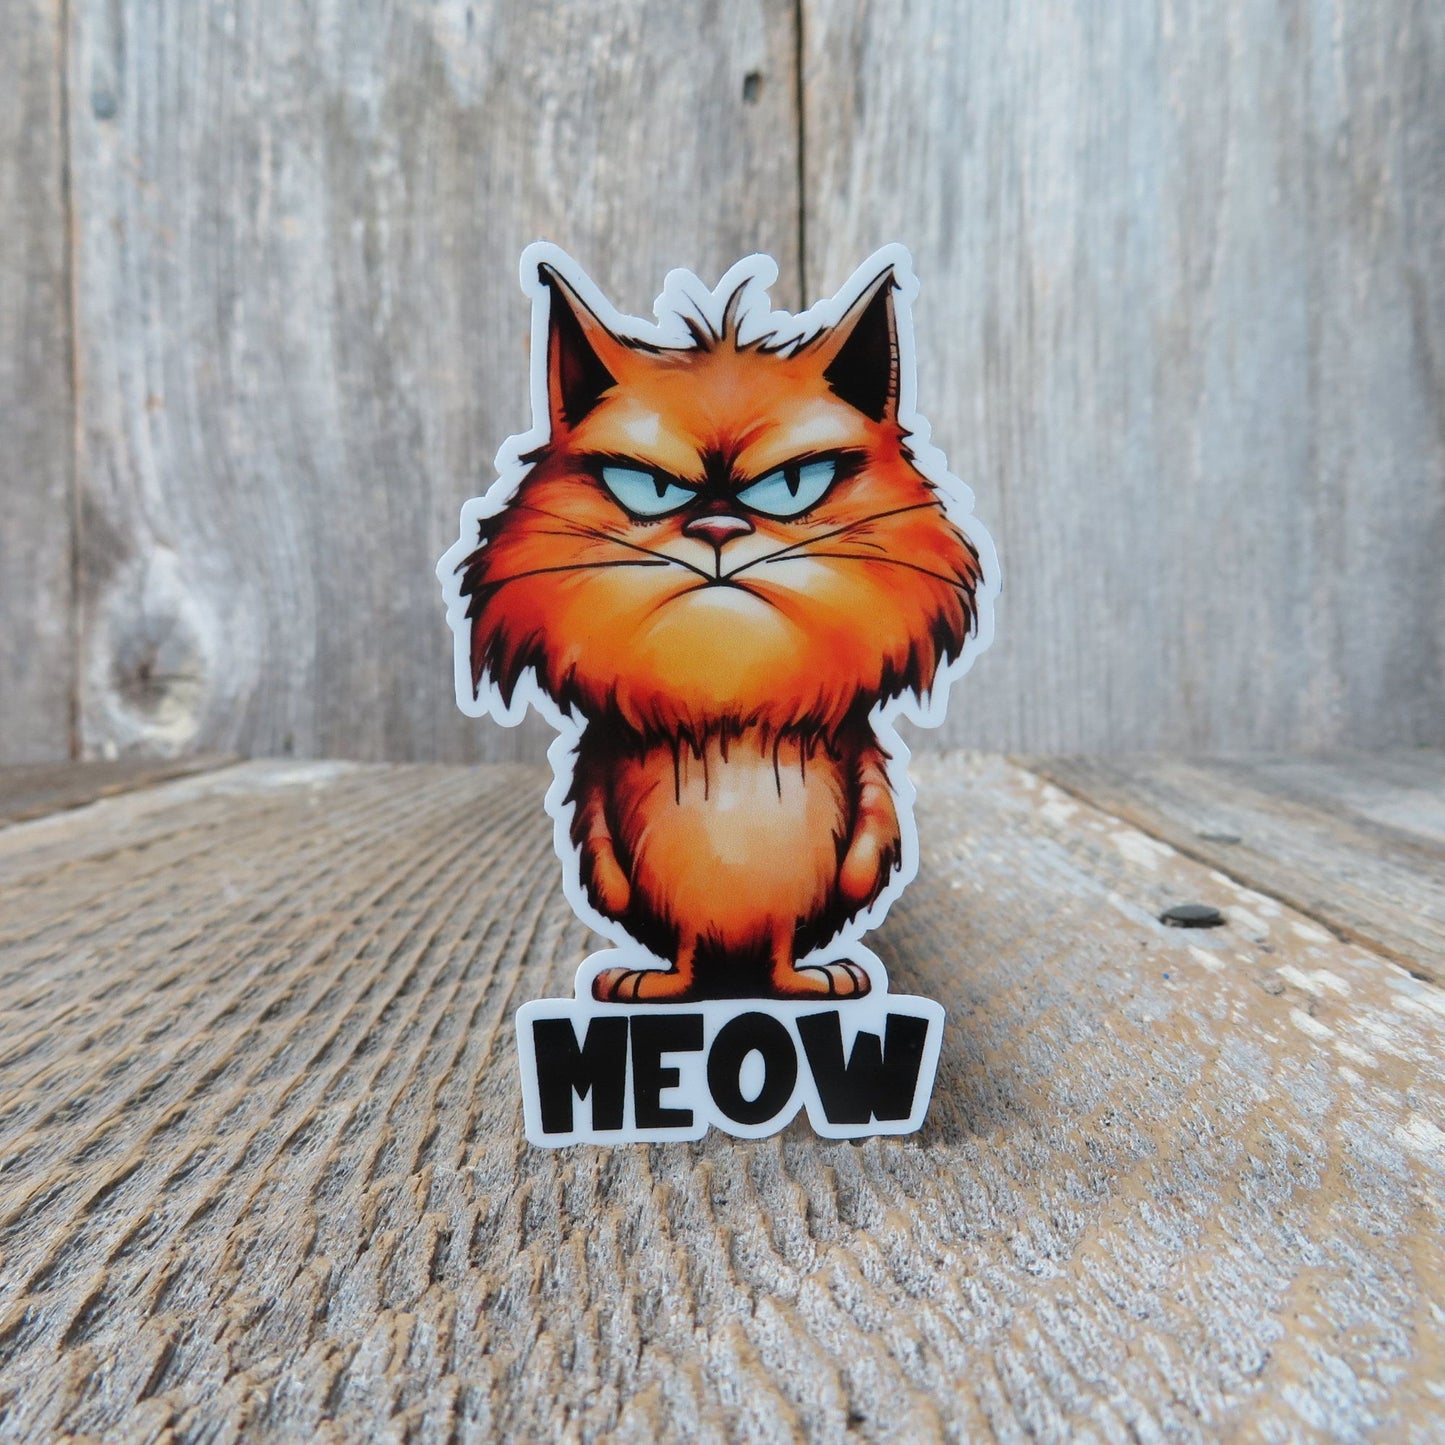 Meow Grumpy Cat Sticker Full Color Social Funny Sarcastic Outspoken